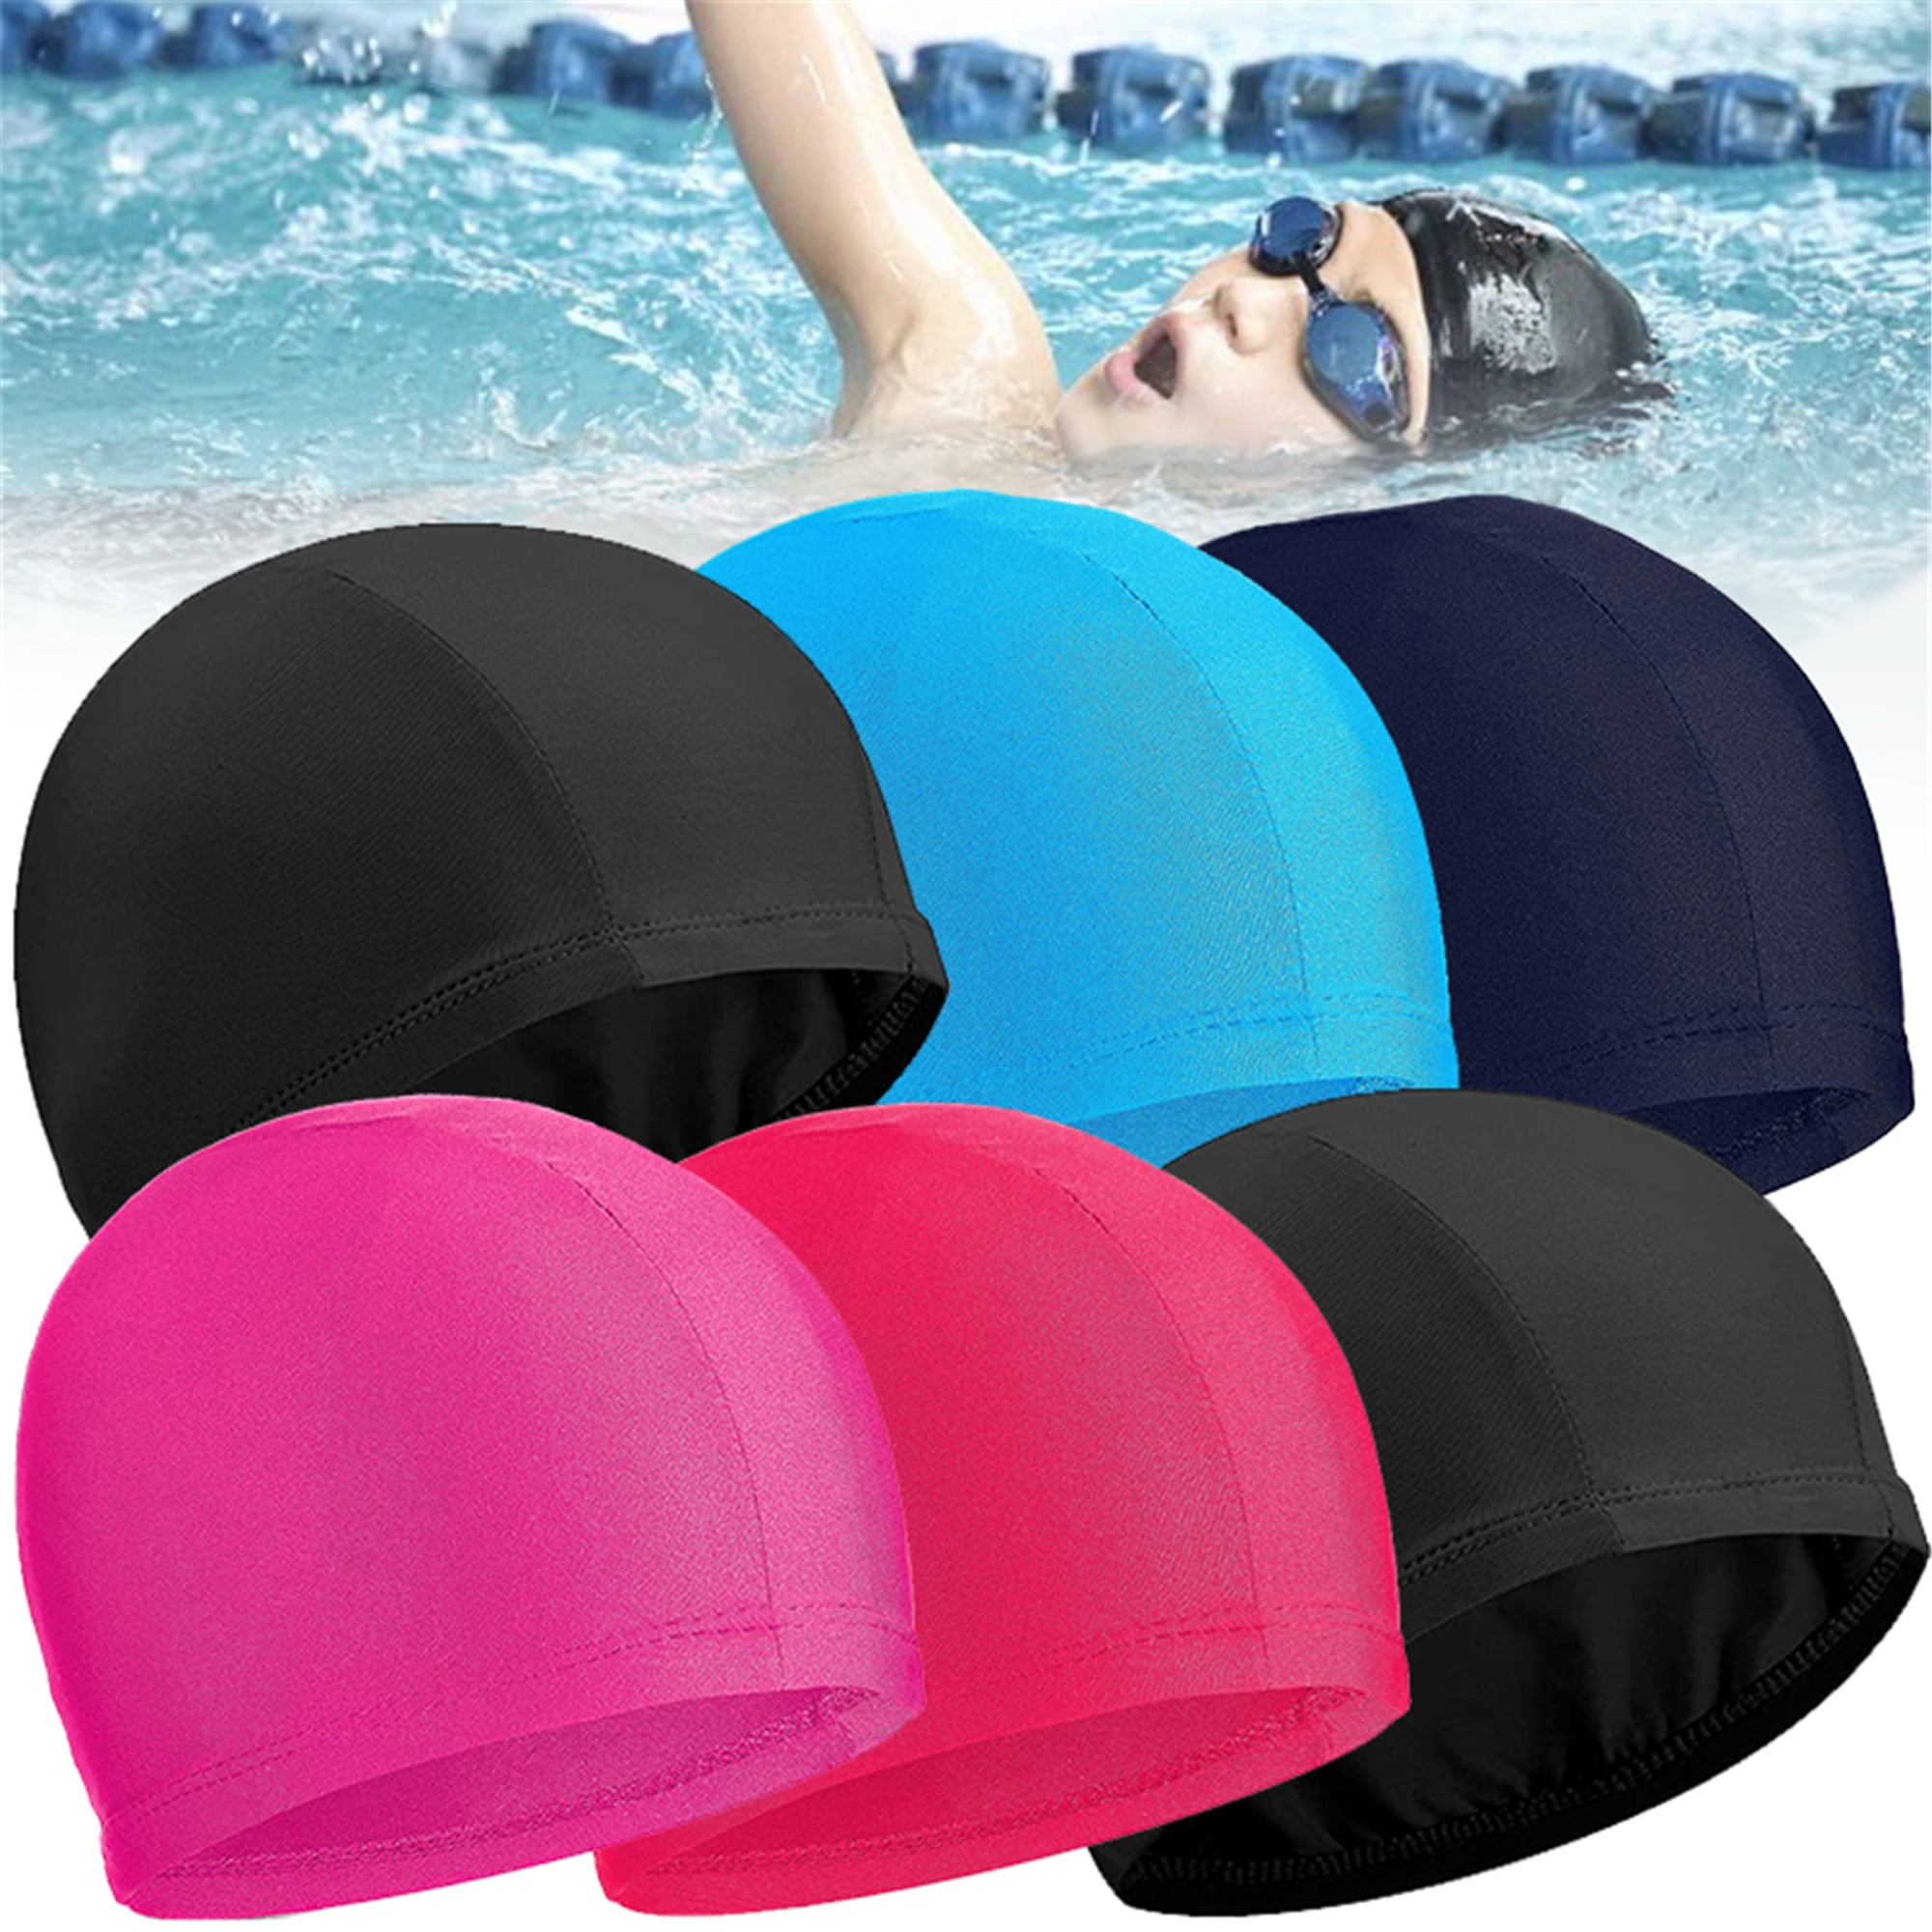 Elastic Fabric Protect Ears Long Hair Swim Pool Hat Swimming Cap For Adults new. 